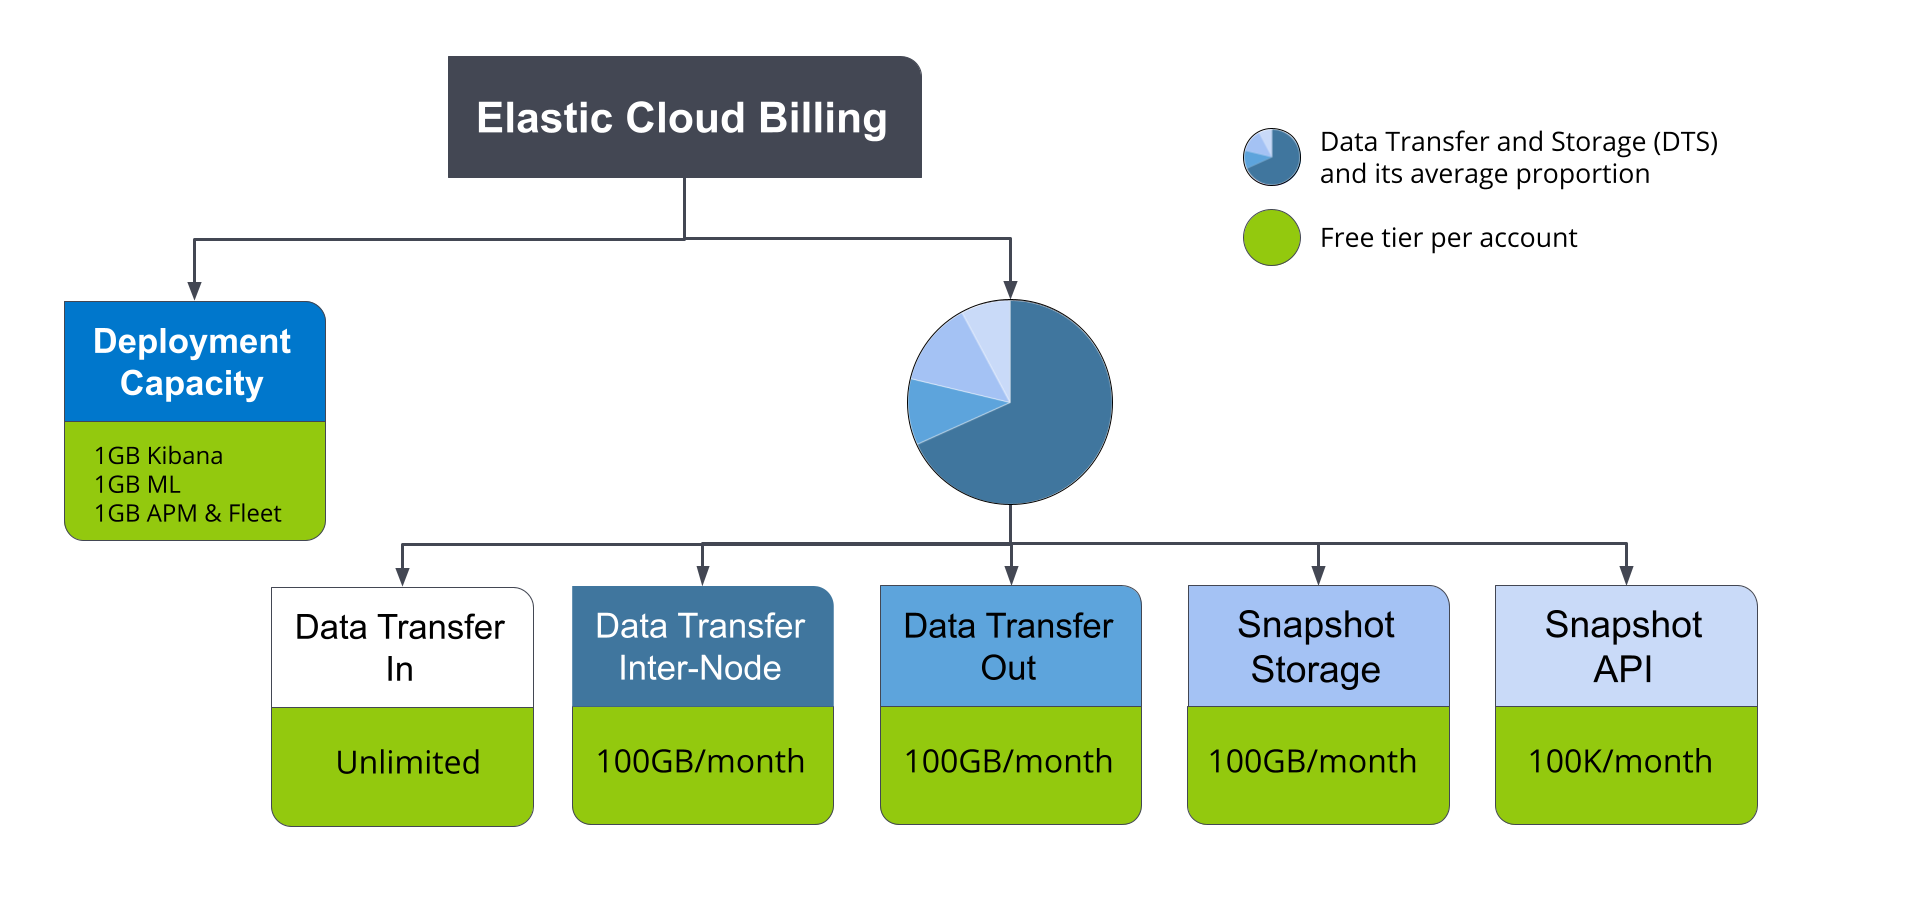 Elastic Cloud bill breakdown by cost dimension